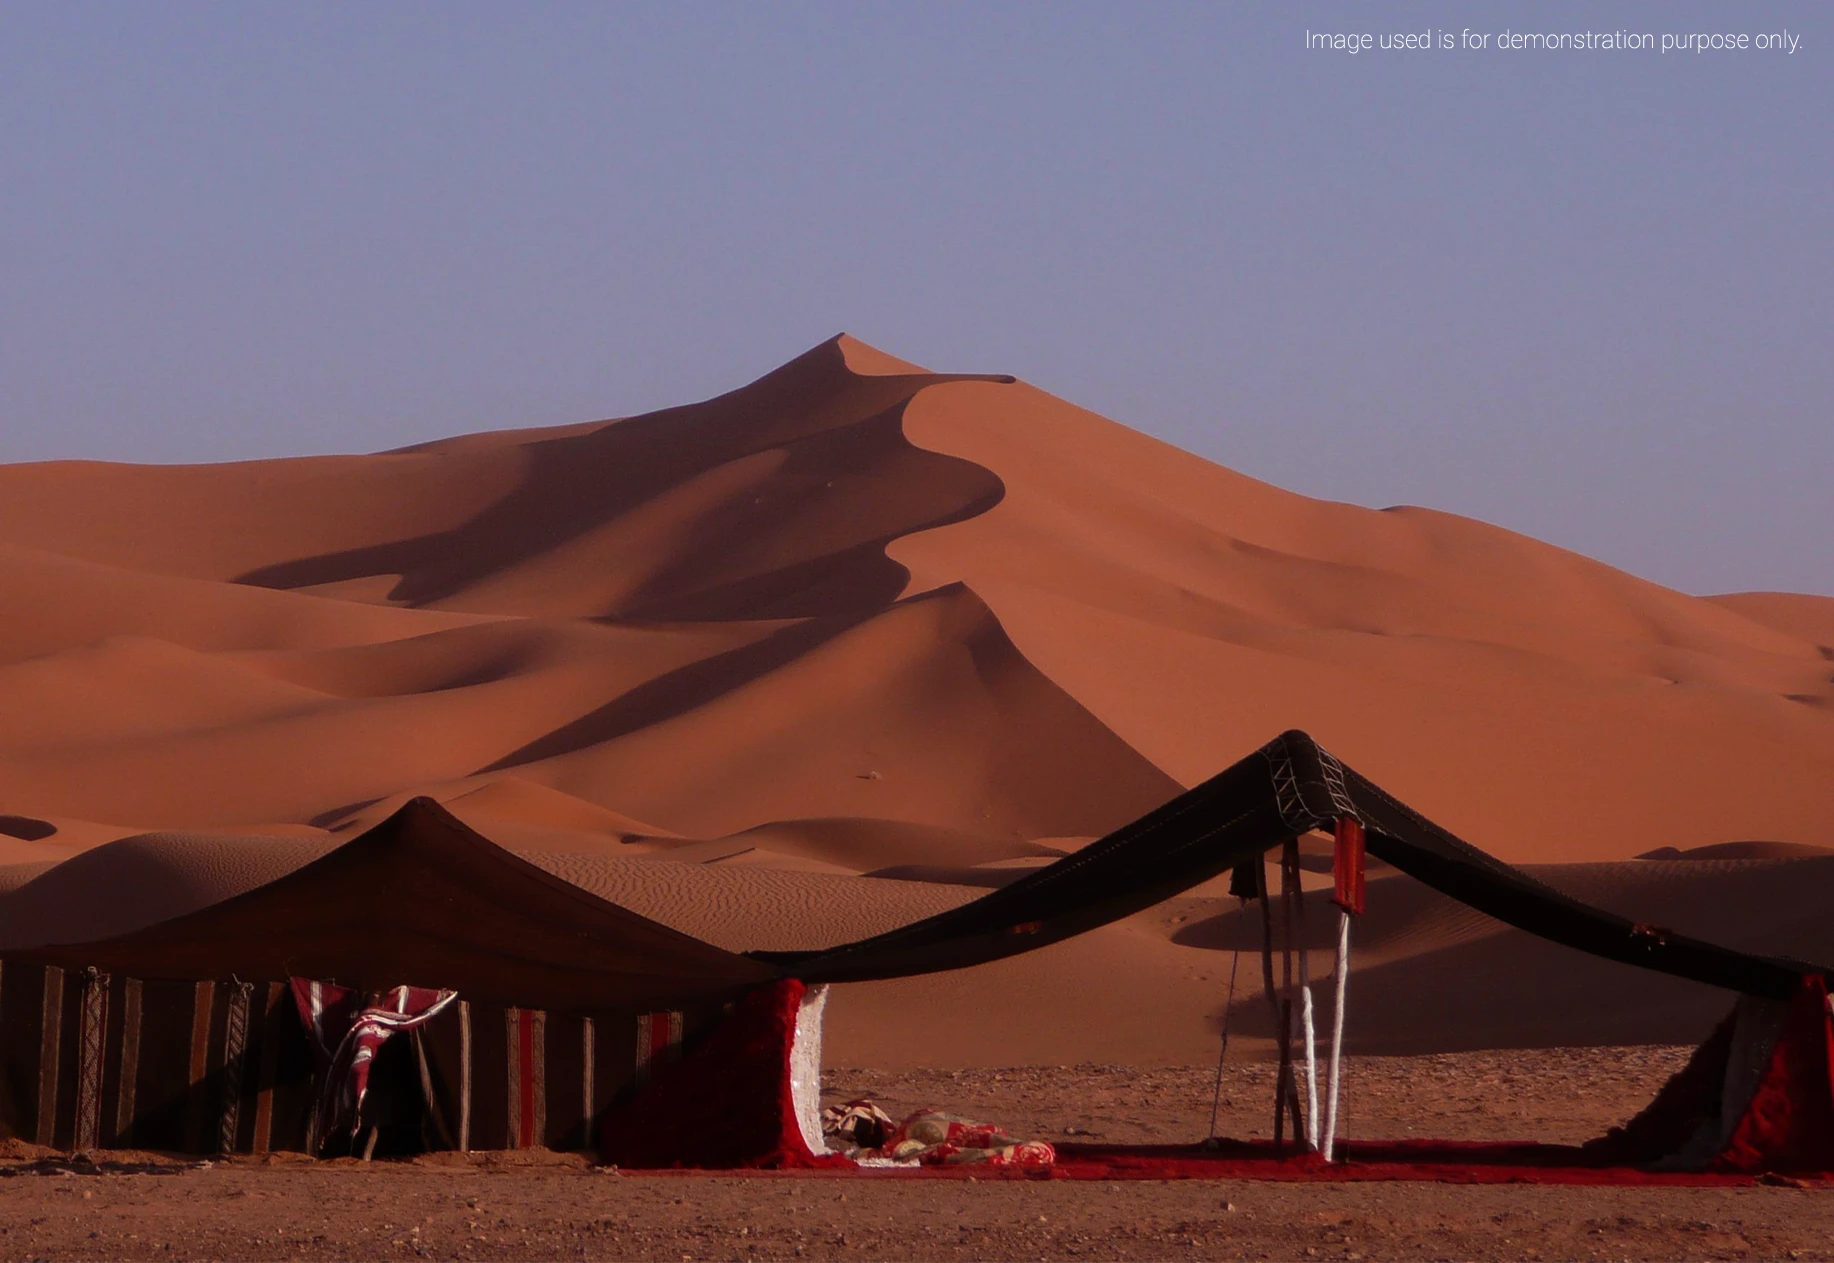 Limra Desert Camp